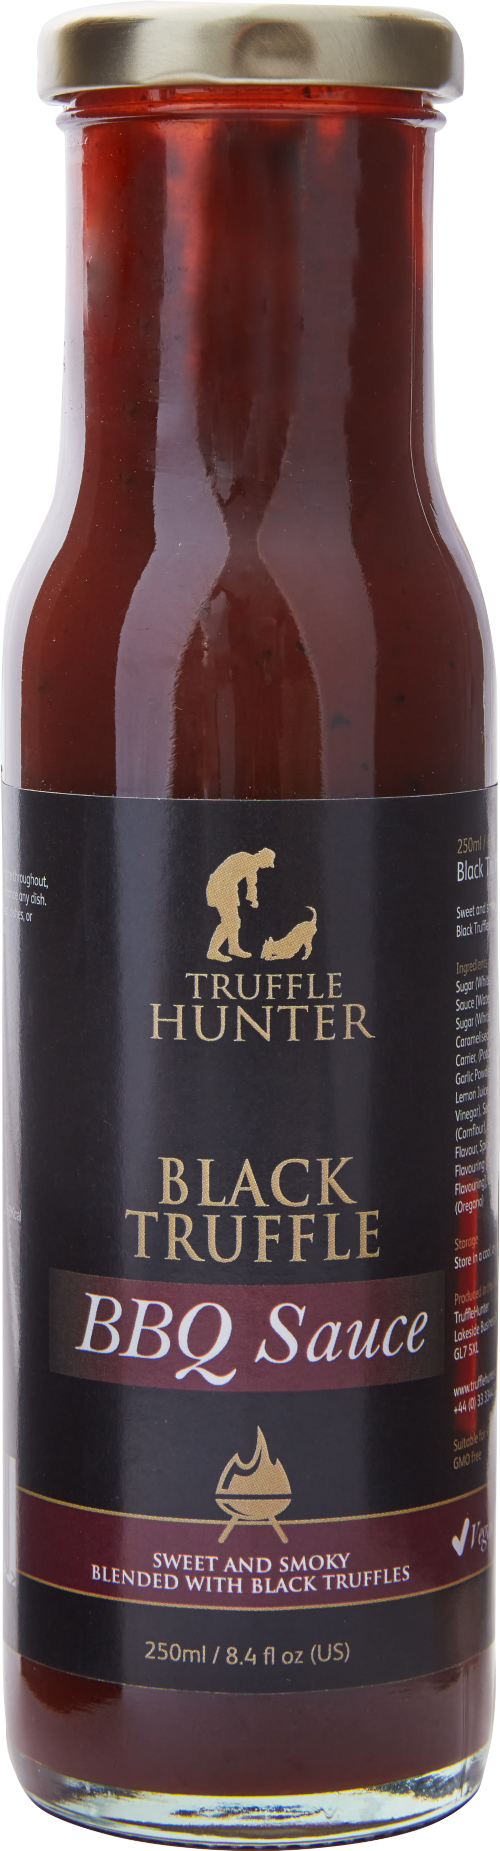 TRUFFLE HUNTER Black Truffle BBQ Sauce 250ml